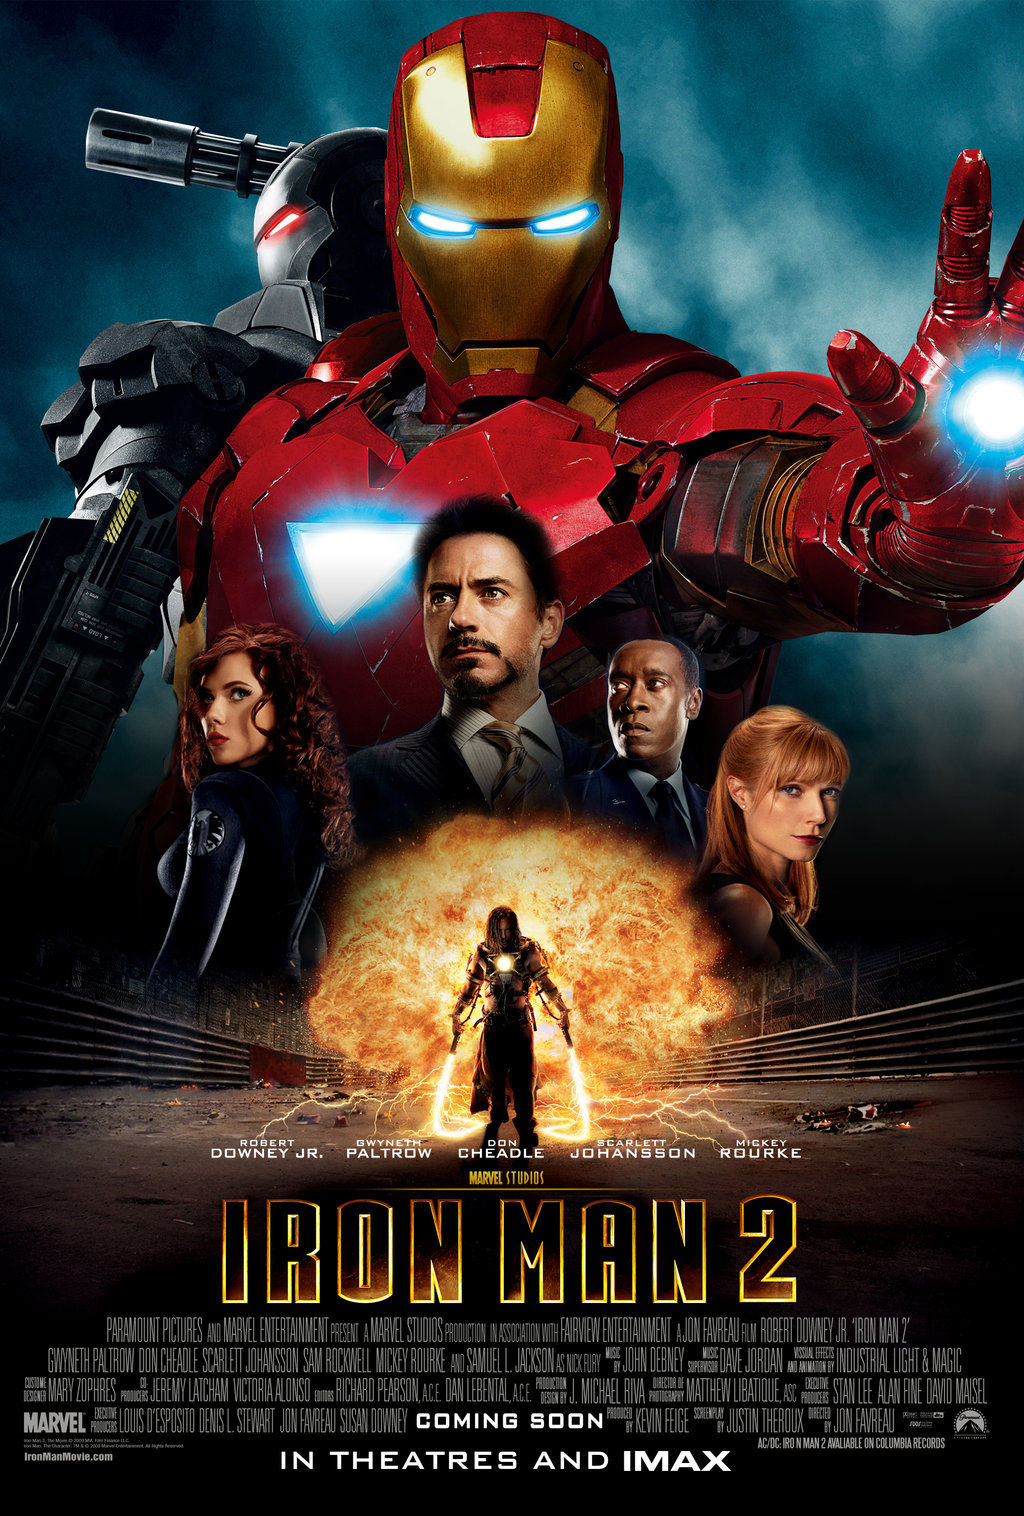 Avengers Endgame Iron Man 2 1 Avengers Endgame : votre programme avant sa sortie Avengers